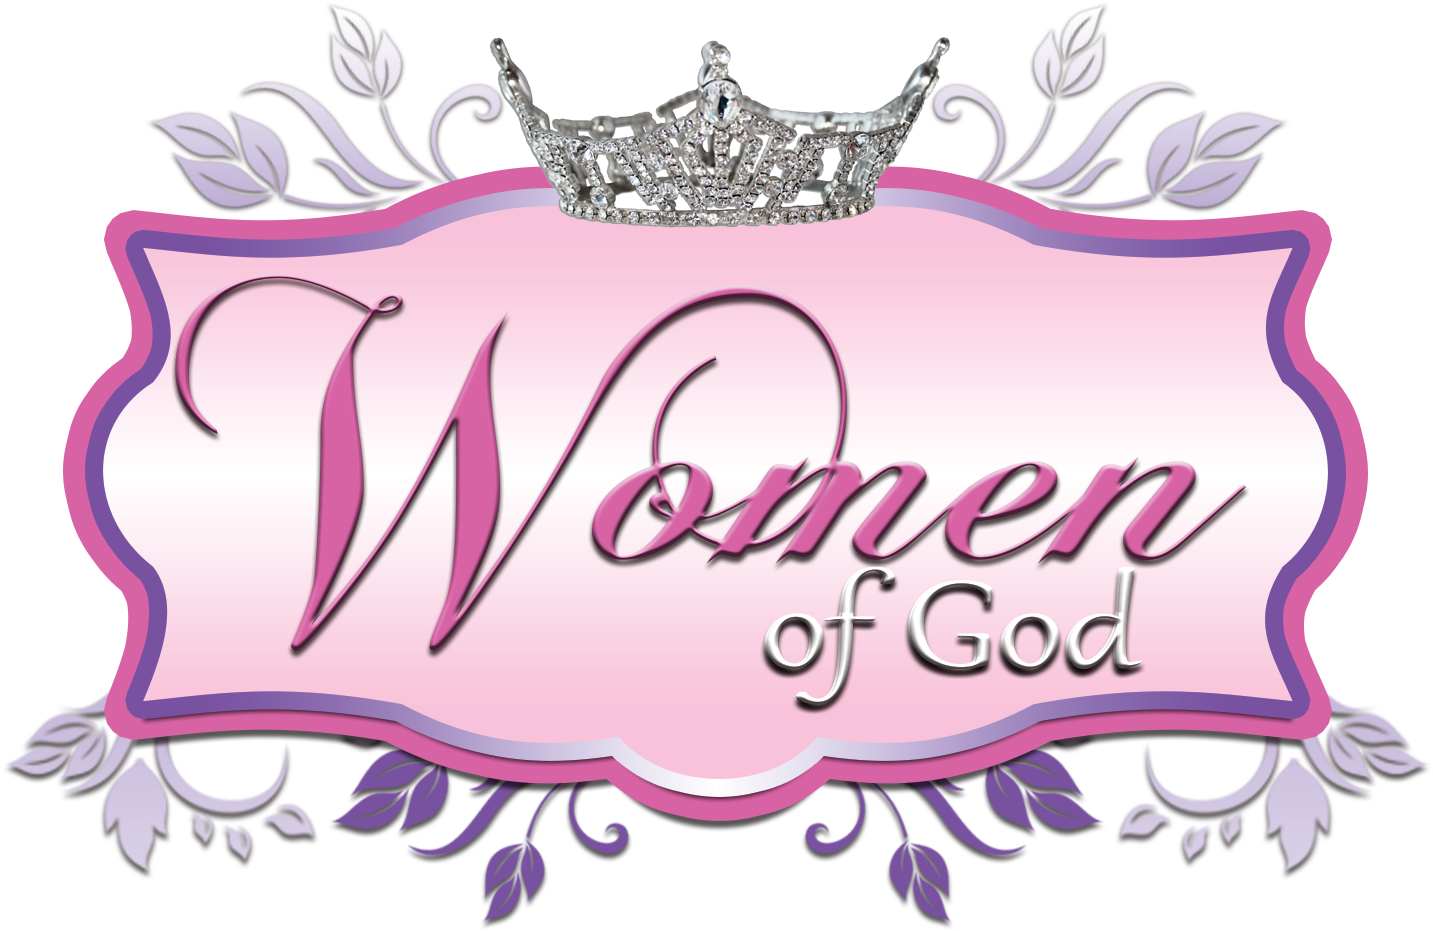 Godly Woman (1500x1016)